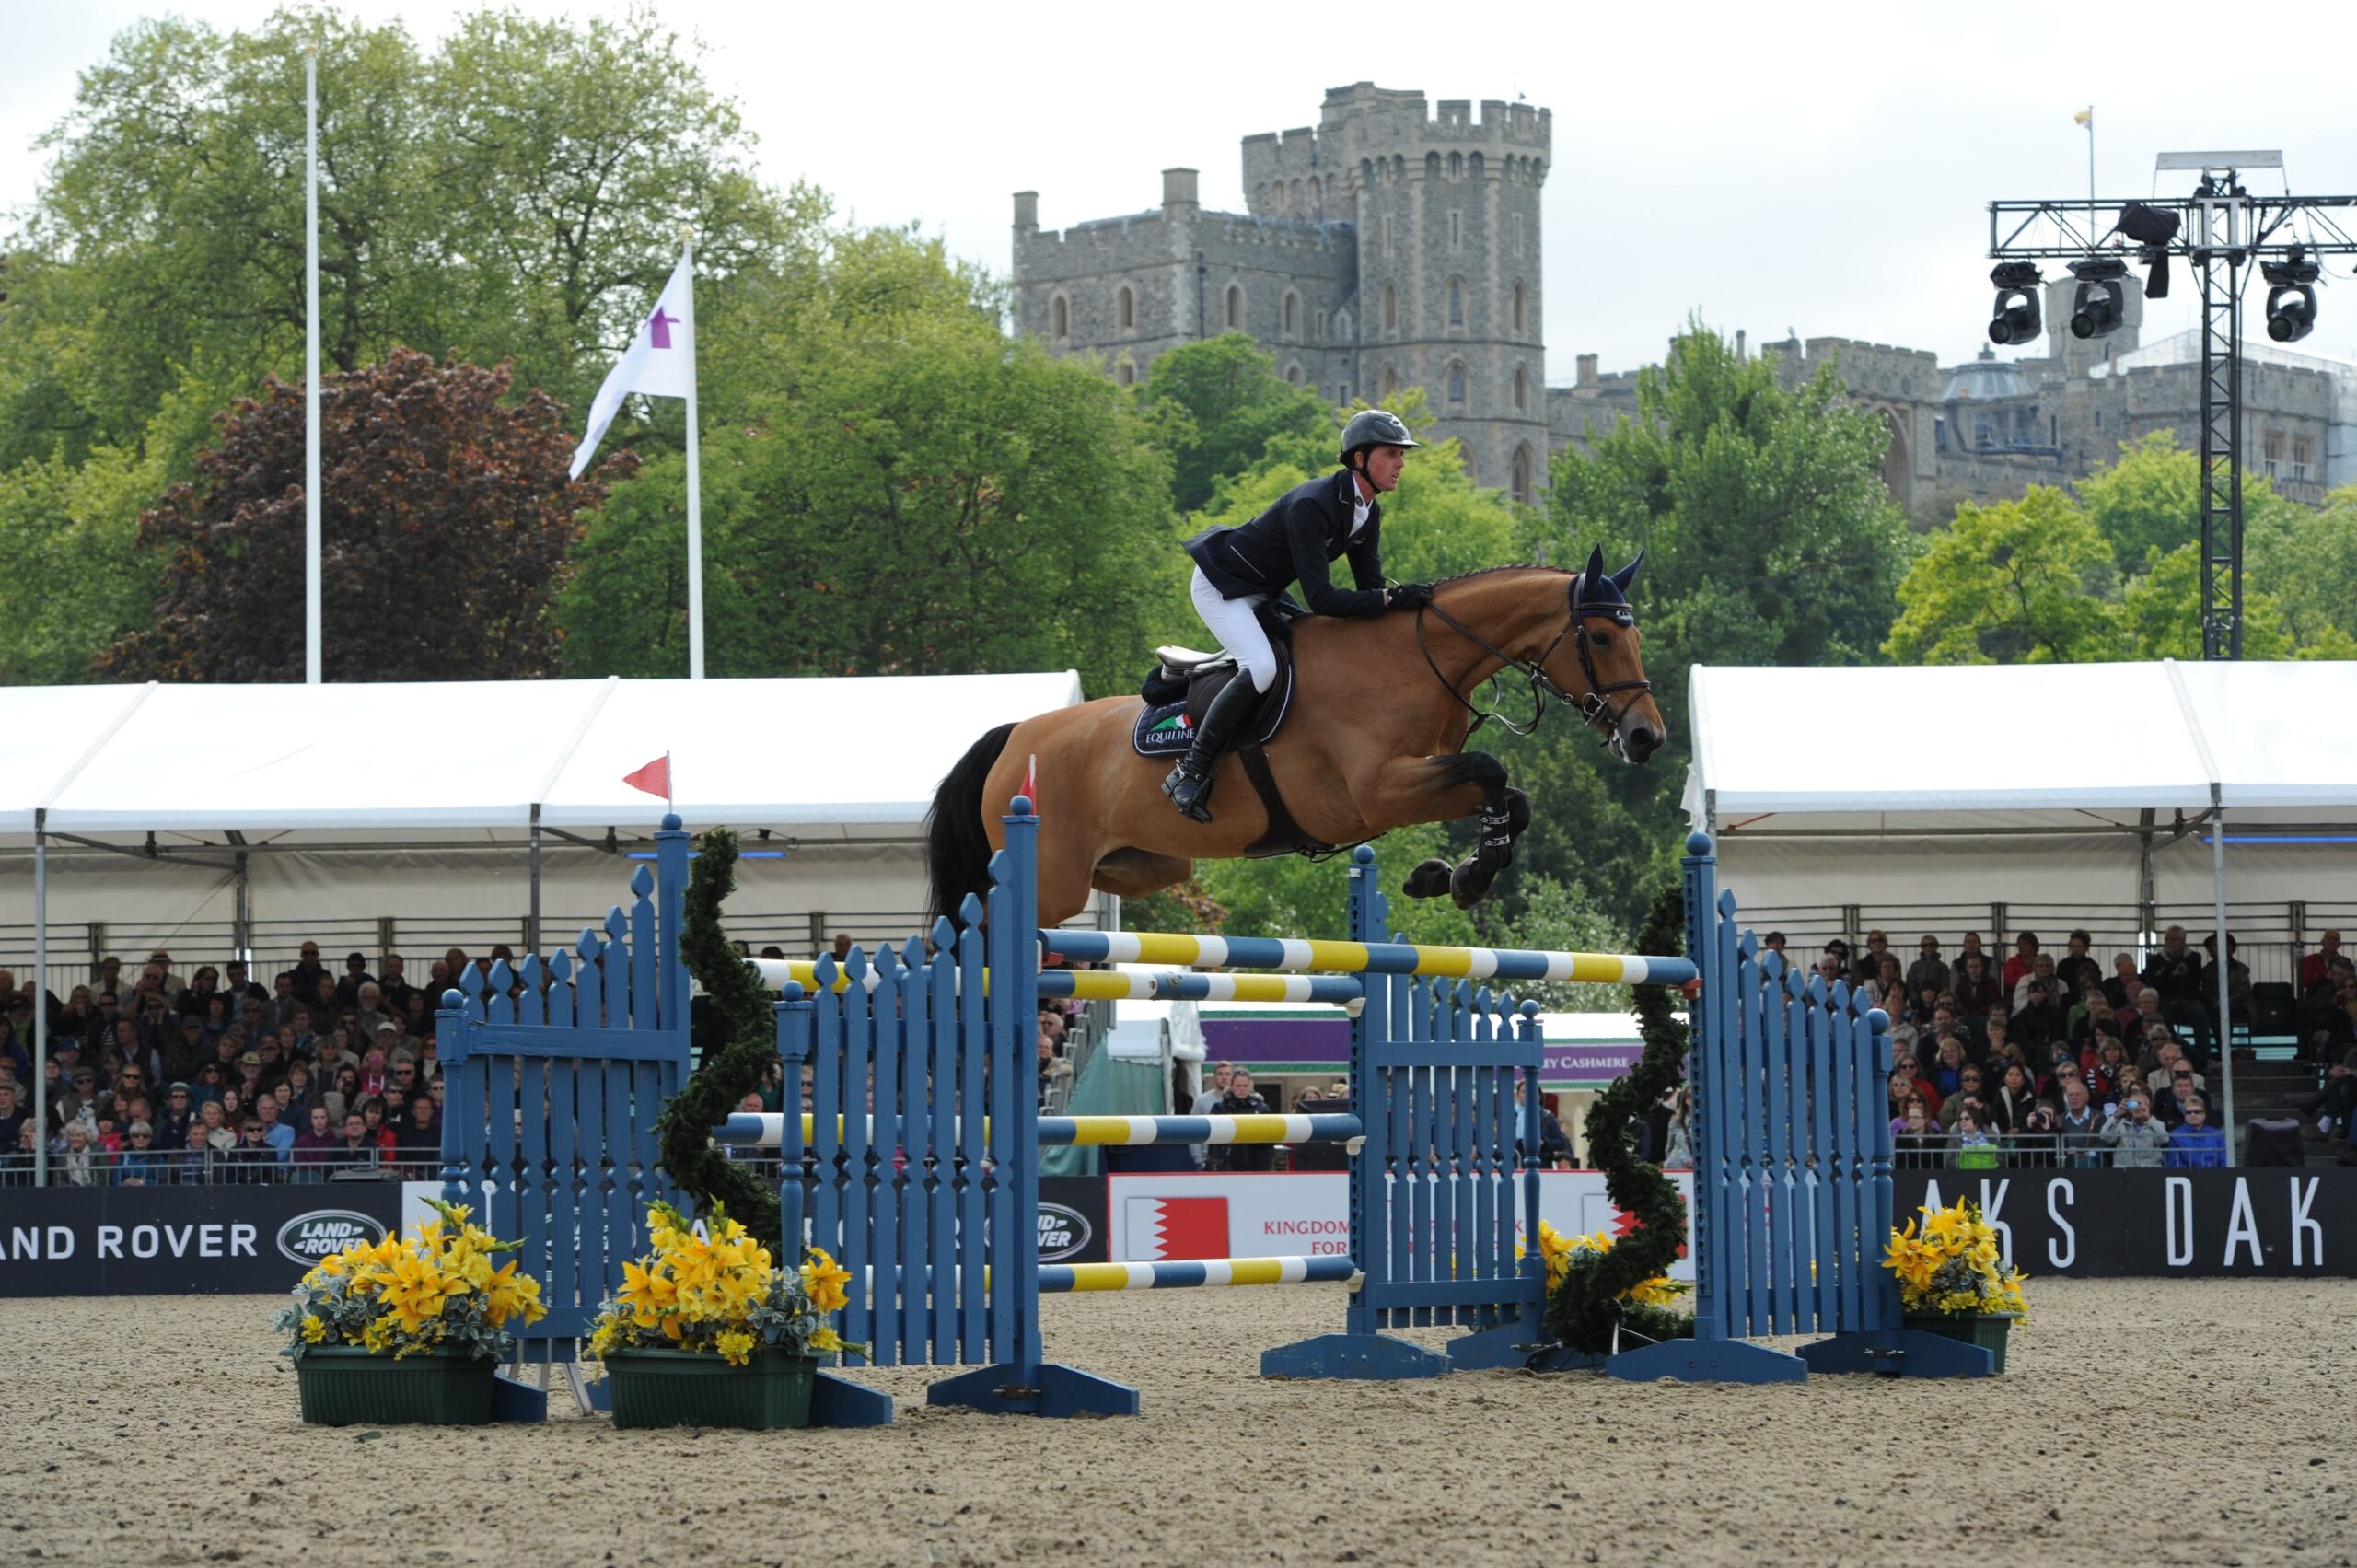 Rider and horse jumping, Royal Windsor Horse Show.